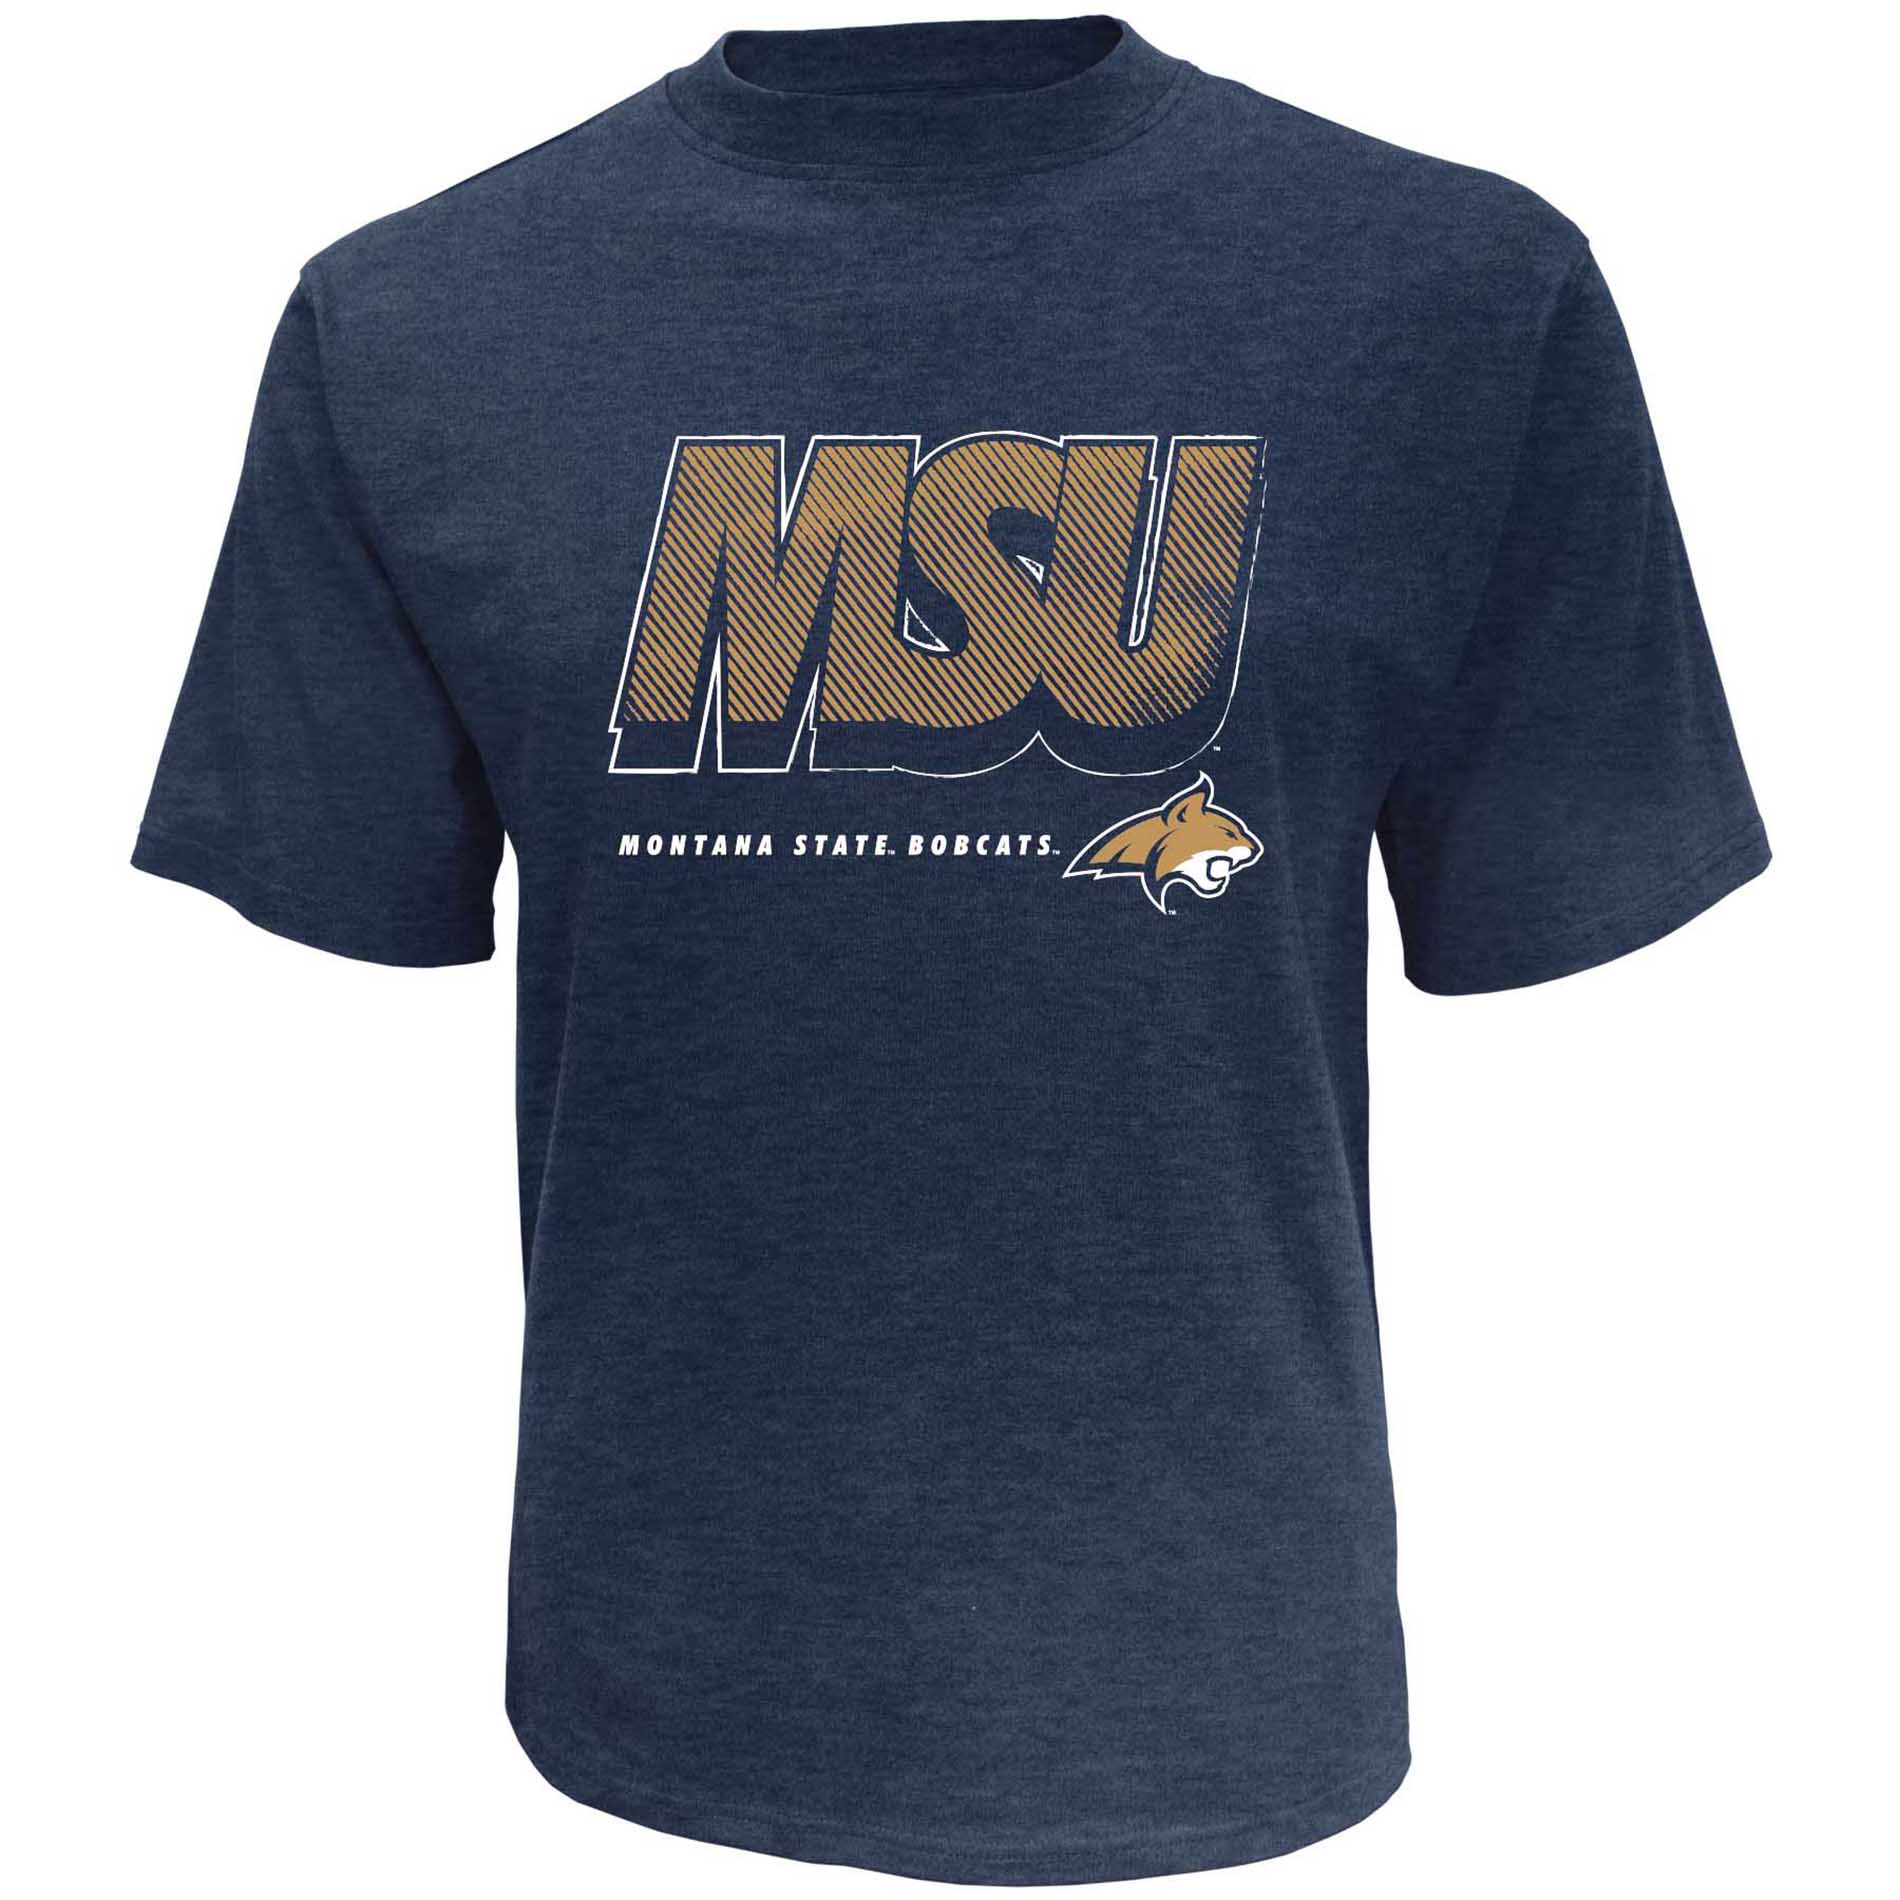 NCAA Mens' Montana State Bobcats Short Sleeve Print Tee